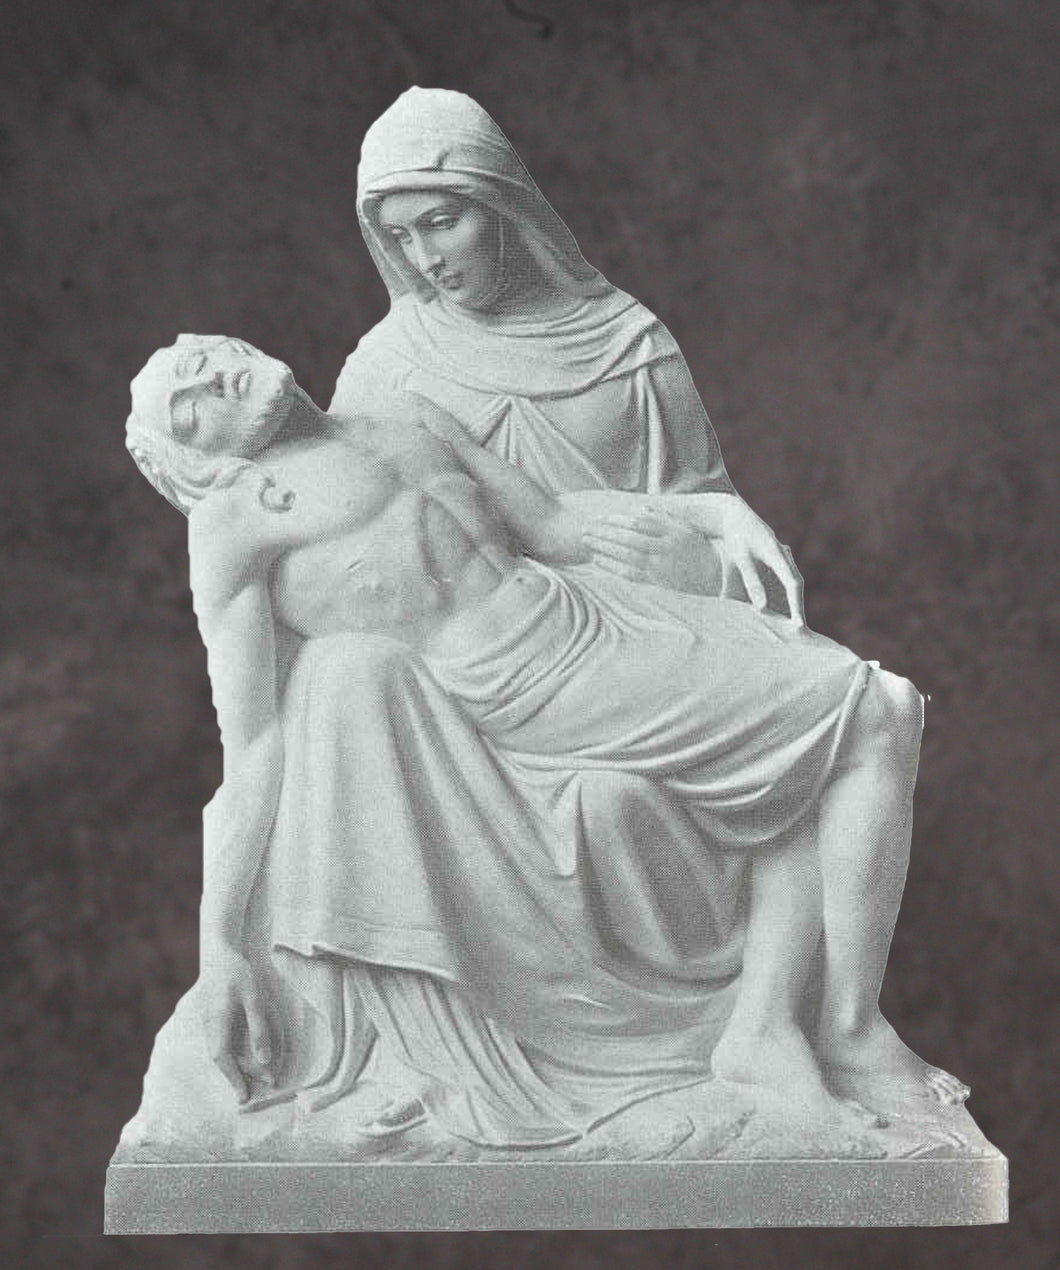 Large Pieta Statue by De De Prato in Solid Marble - 48”H